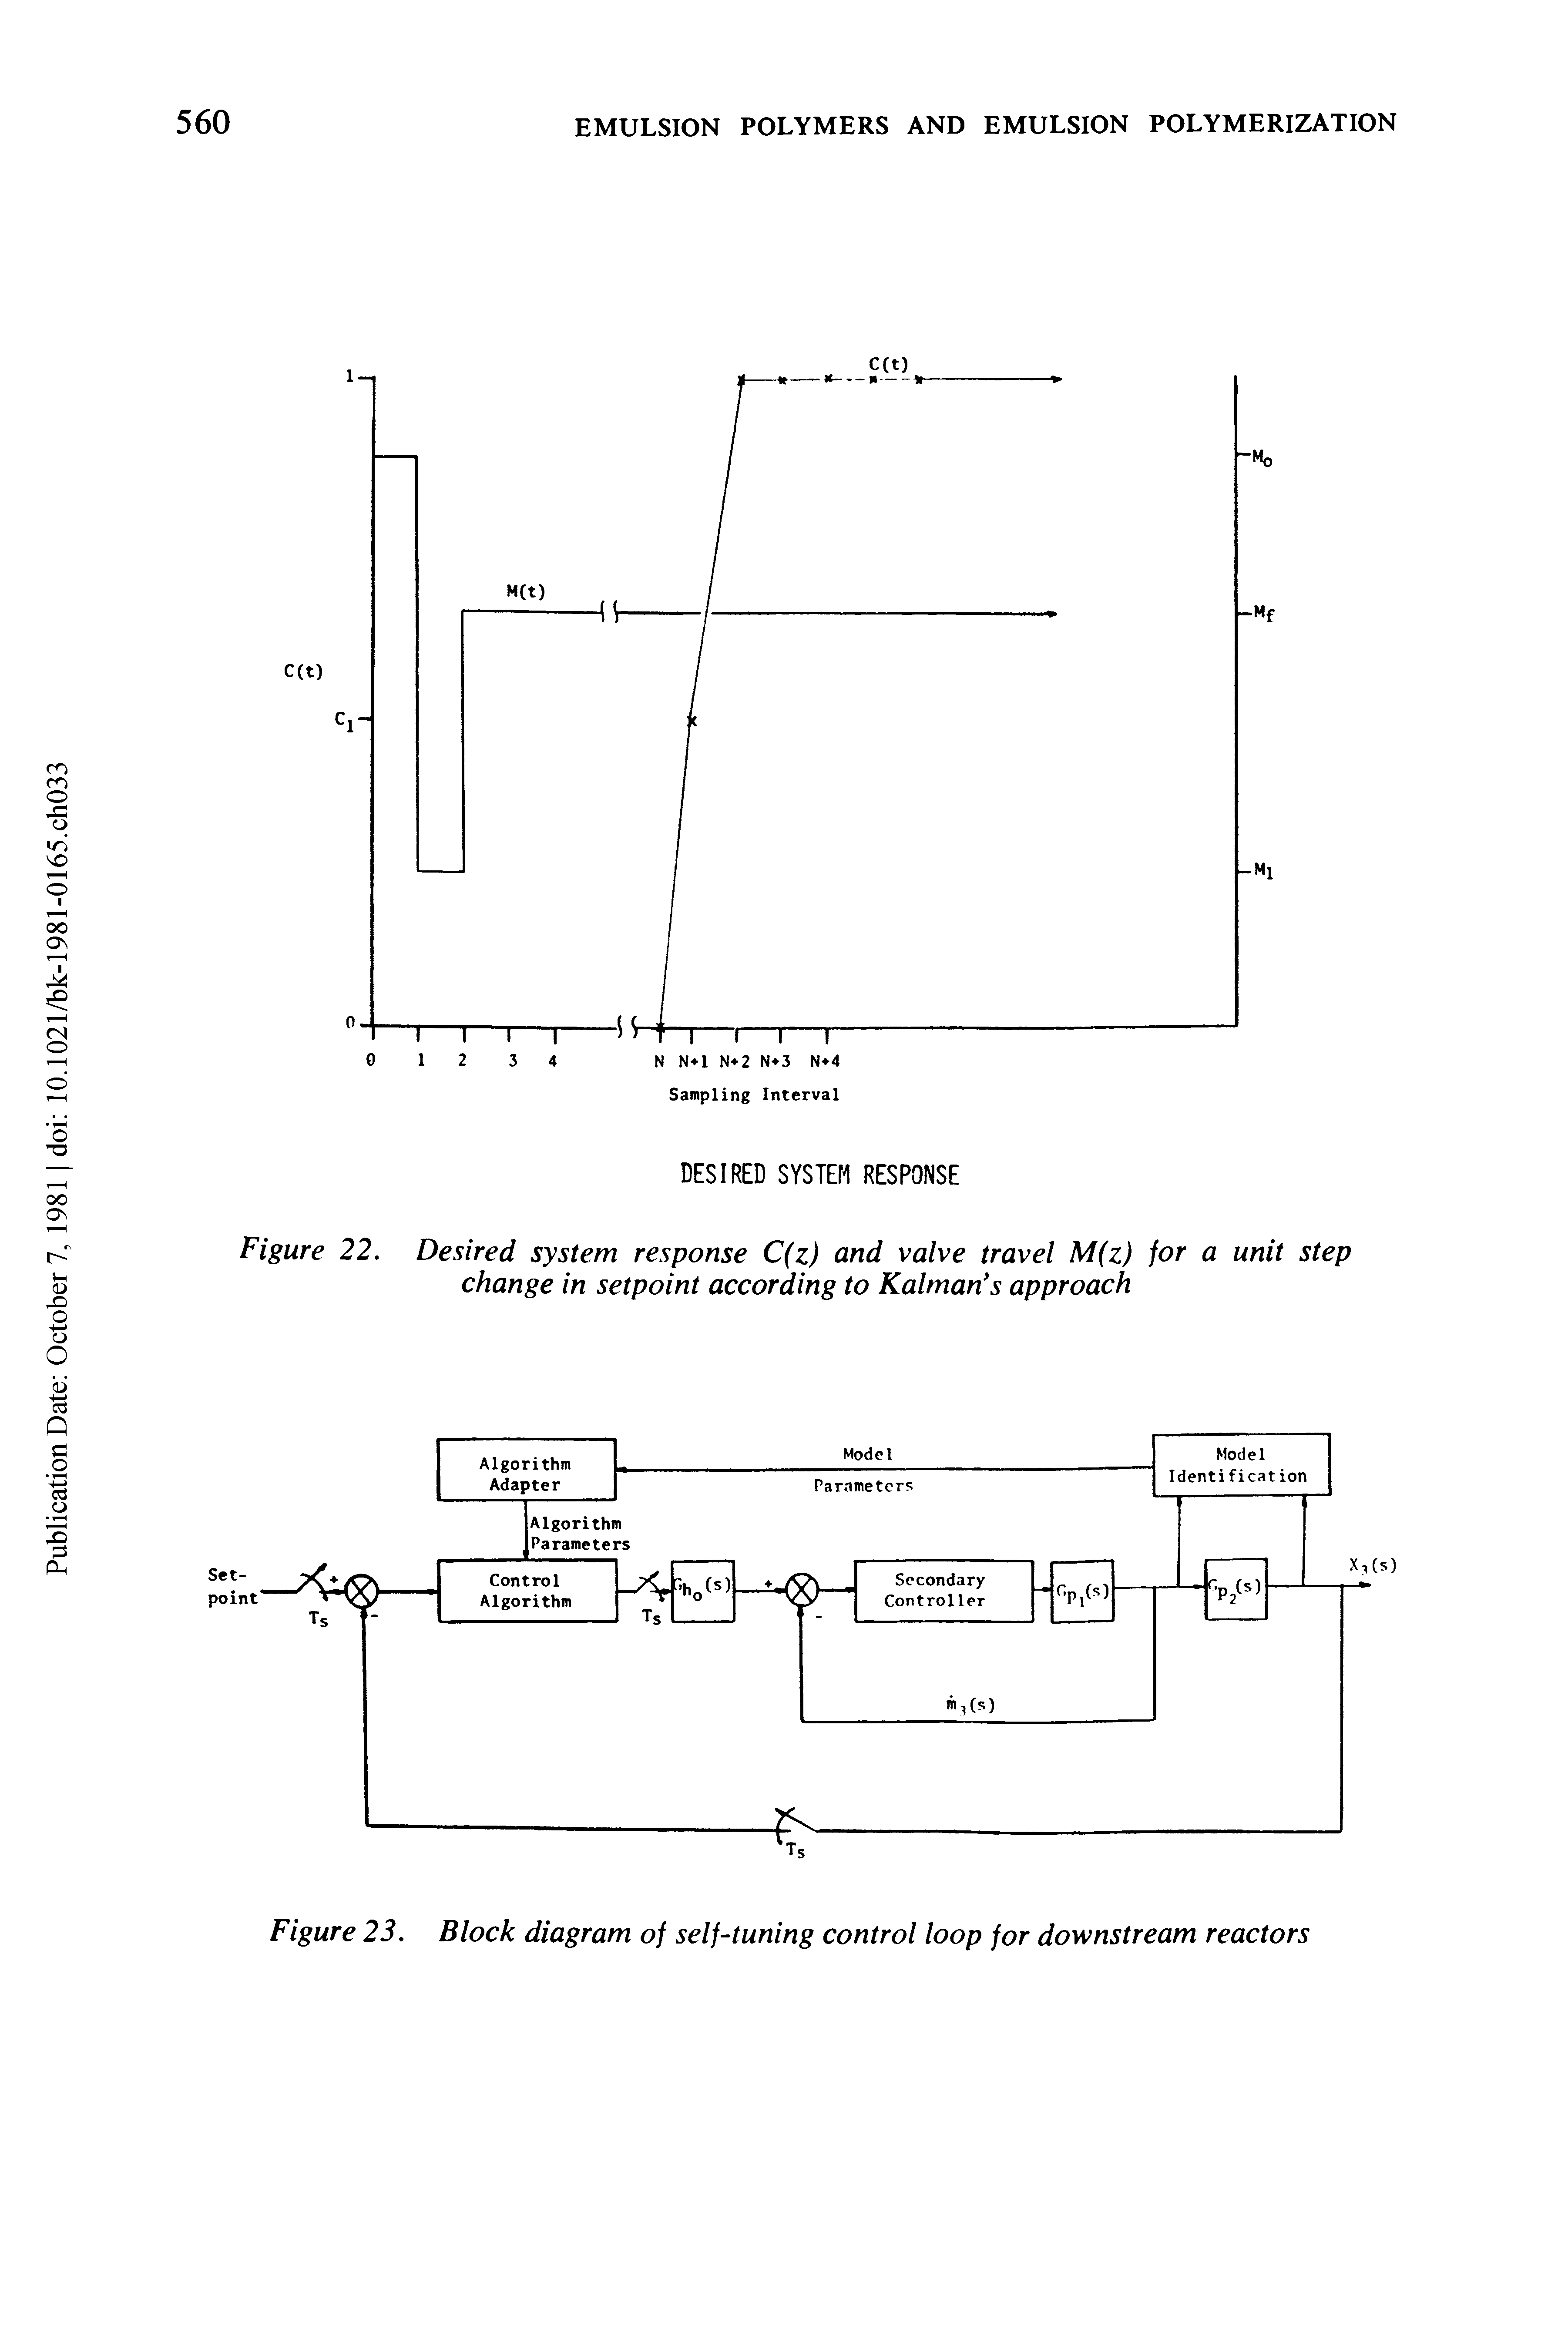 Figure 23. Block diagram of self-tuning control loop for downstream reactors...